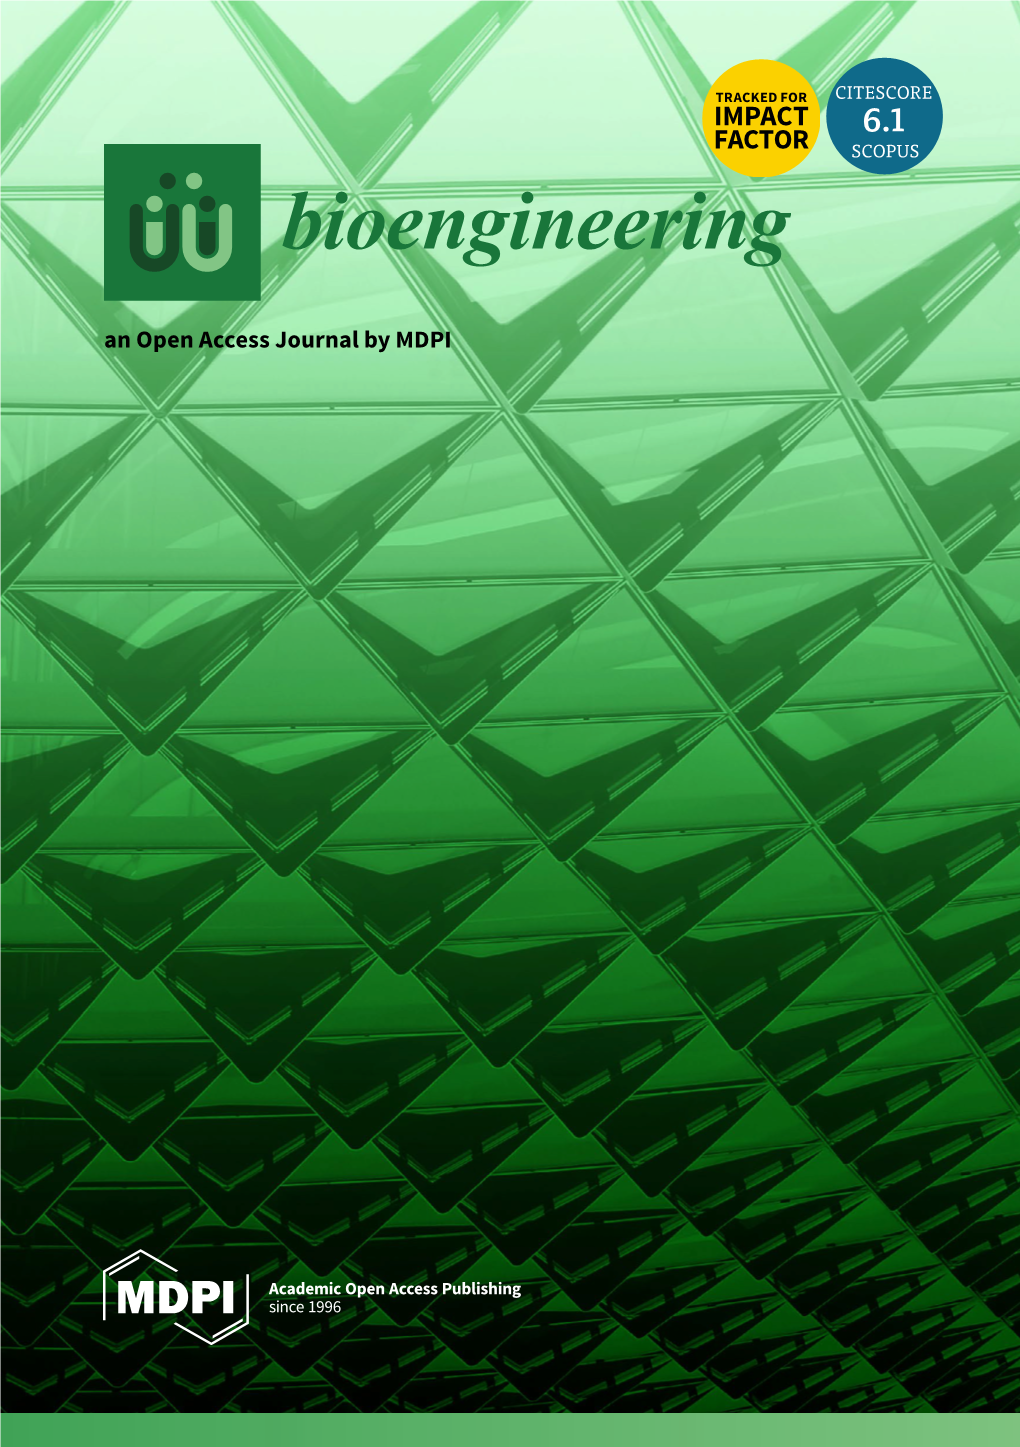 Bioengineering an Open Access Journal by MDPI TRACKED for CITESCORE IMPACT 6.1 Bioengineering FACTOR SCOPUS an Open Access Journal by MDPI